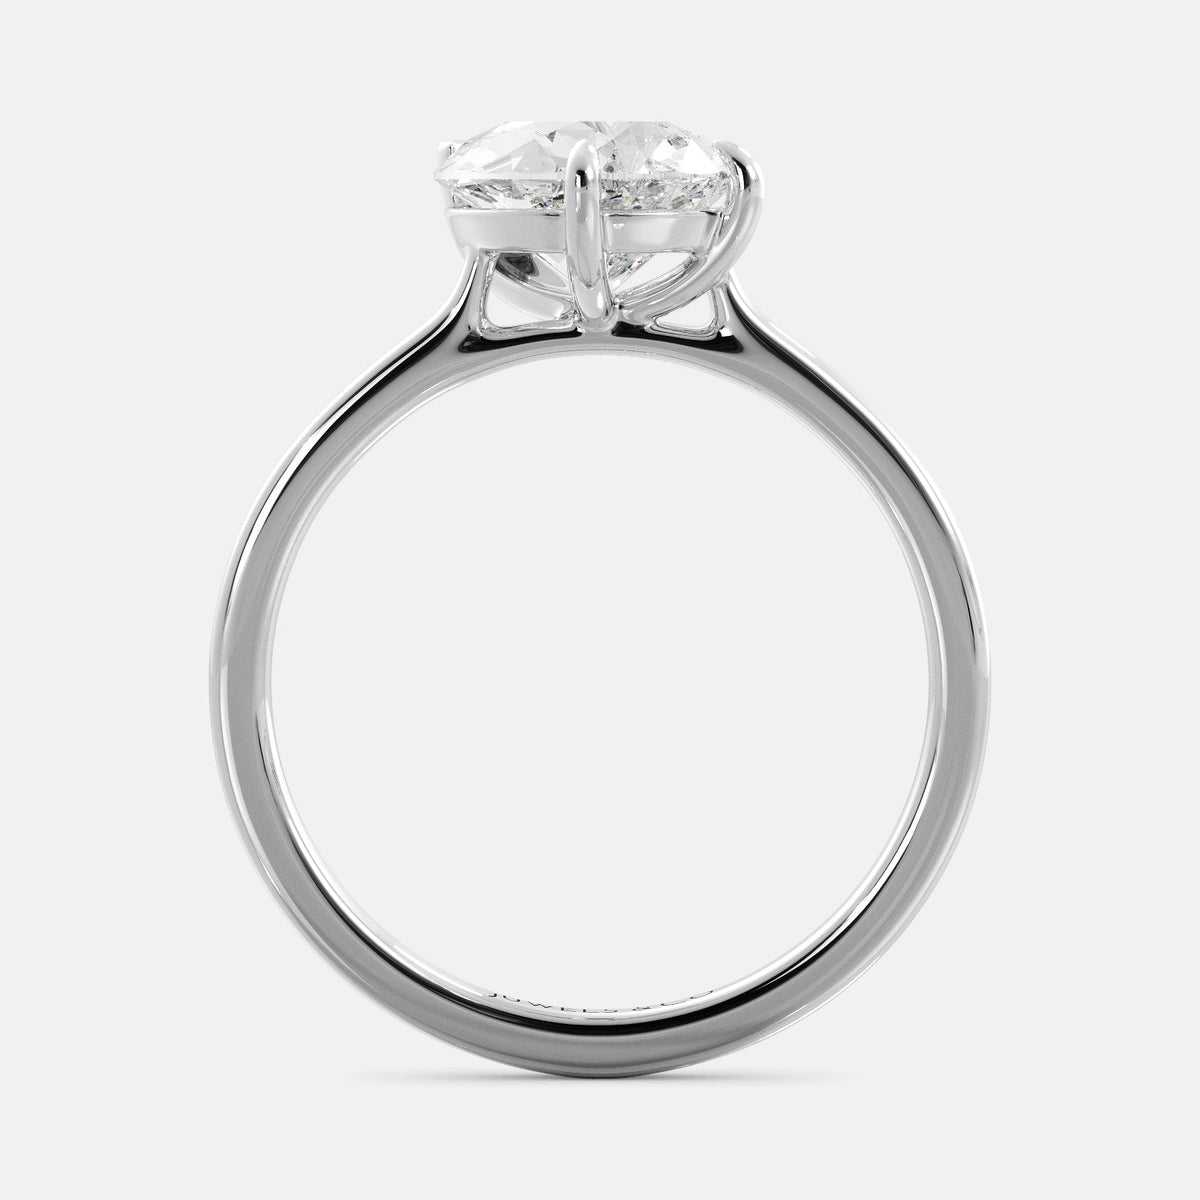 The Emilia Pear Diamond Ring: Where Elegance Meets Empowerment